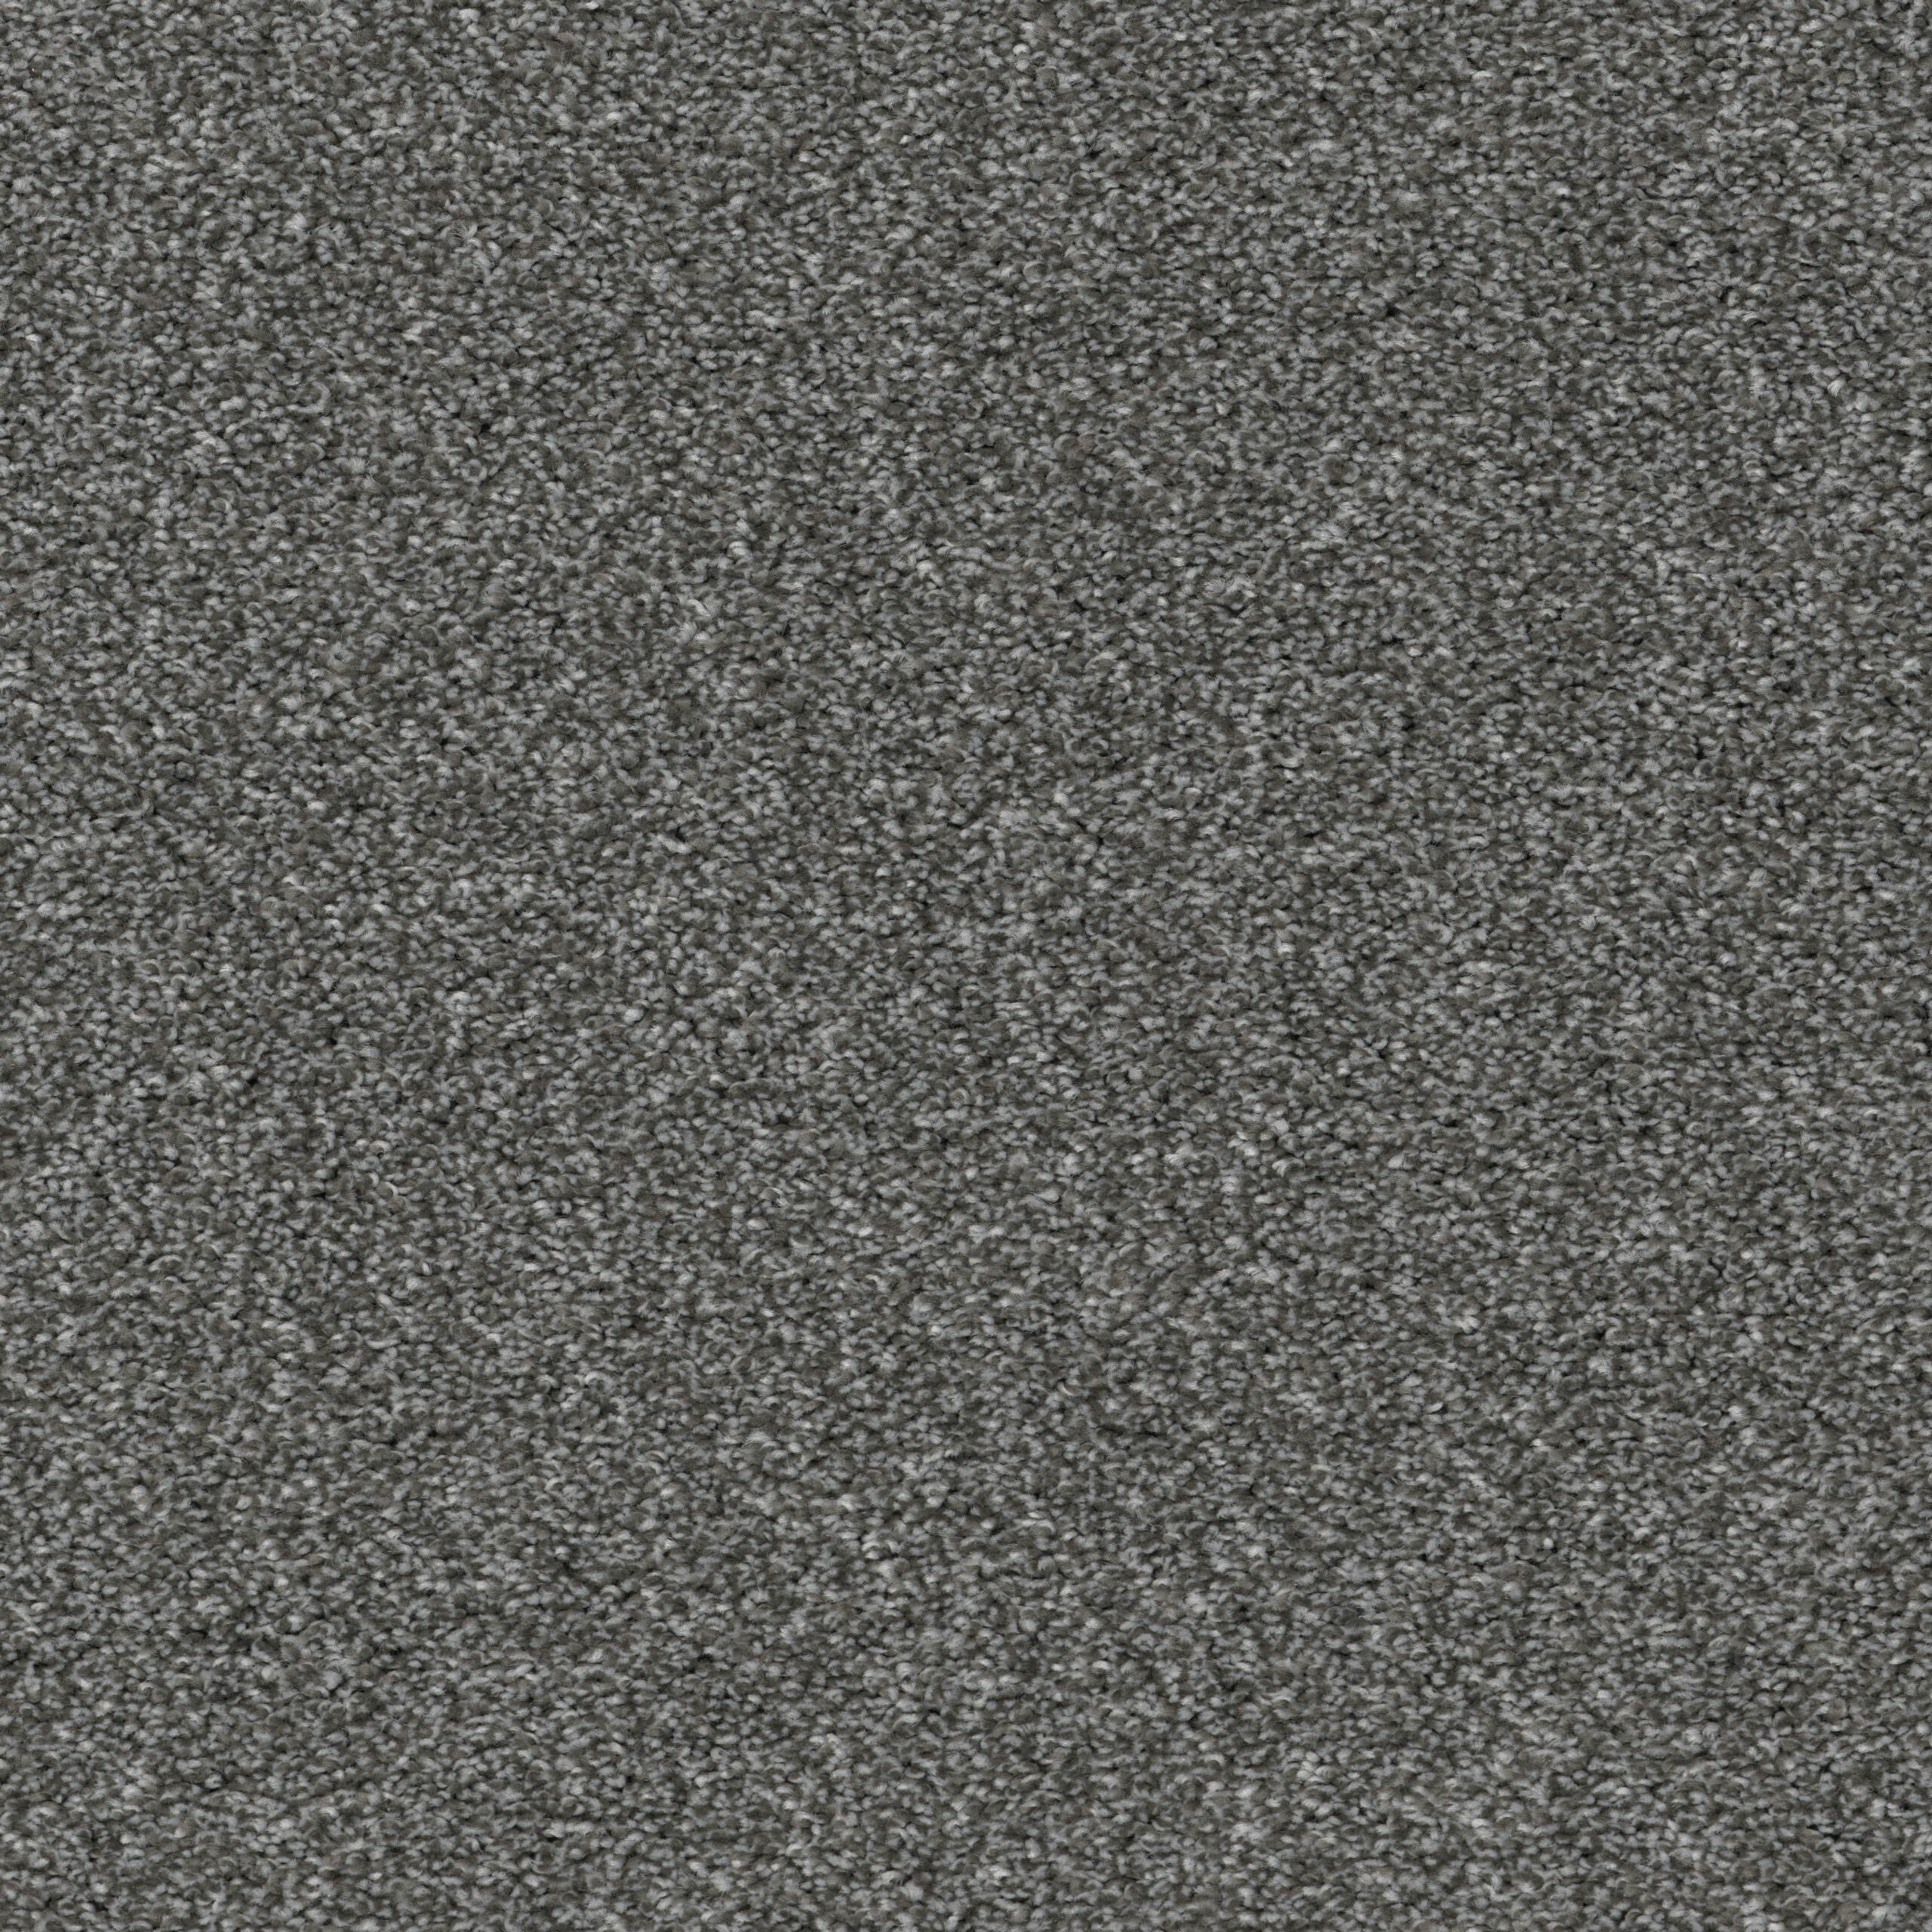 Allure - Iron Frost Carpet